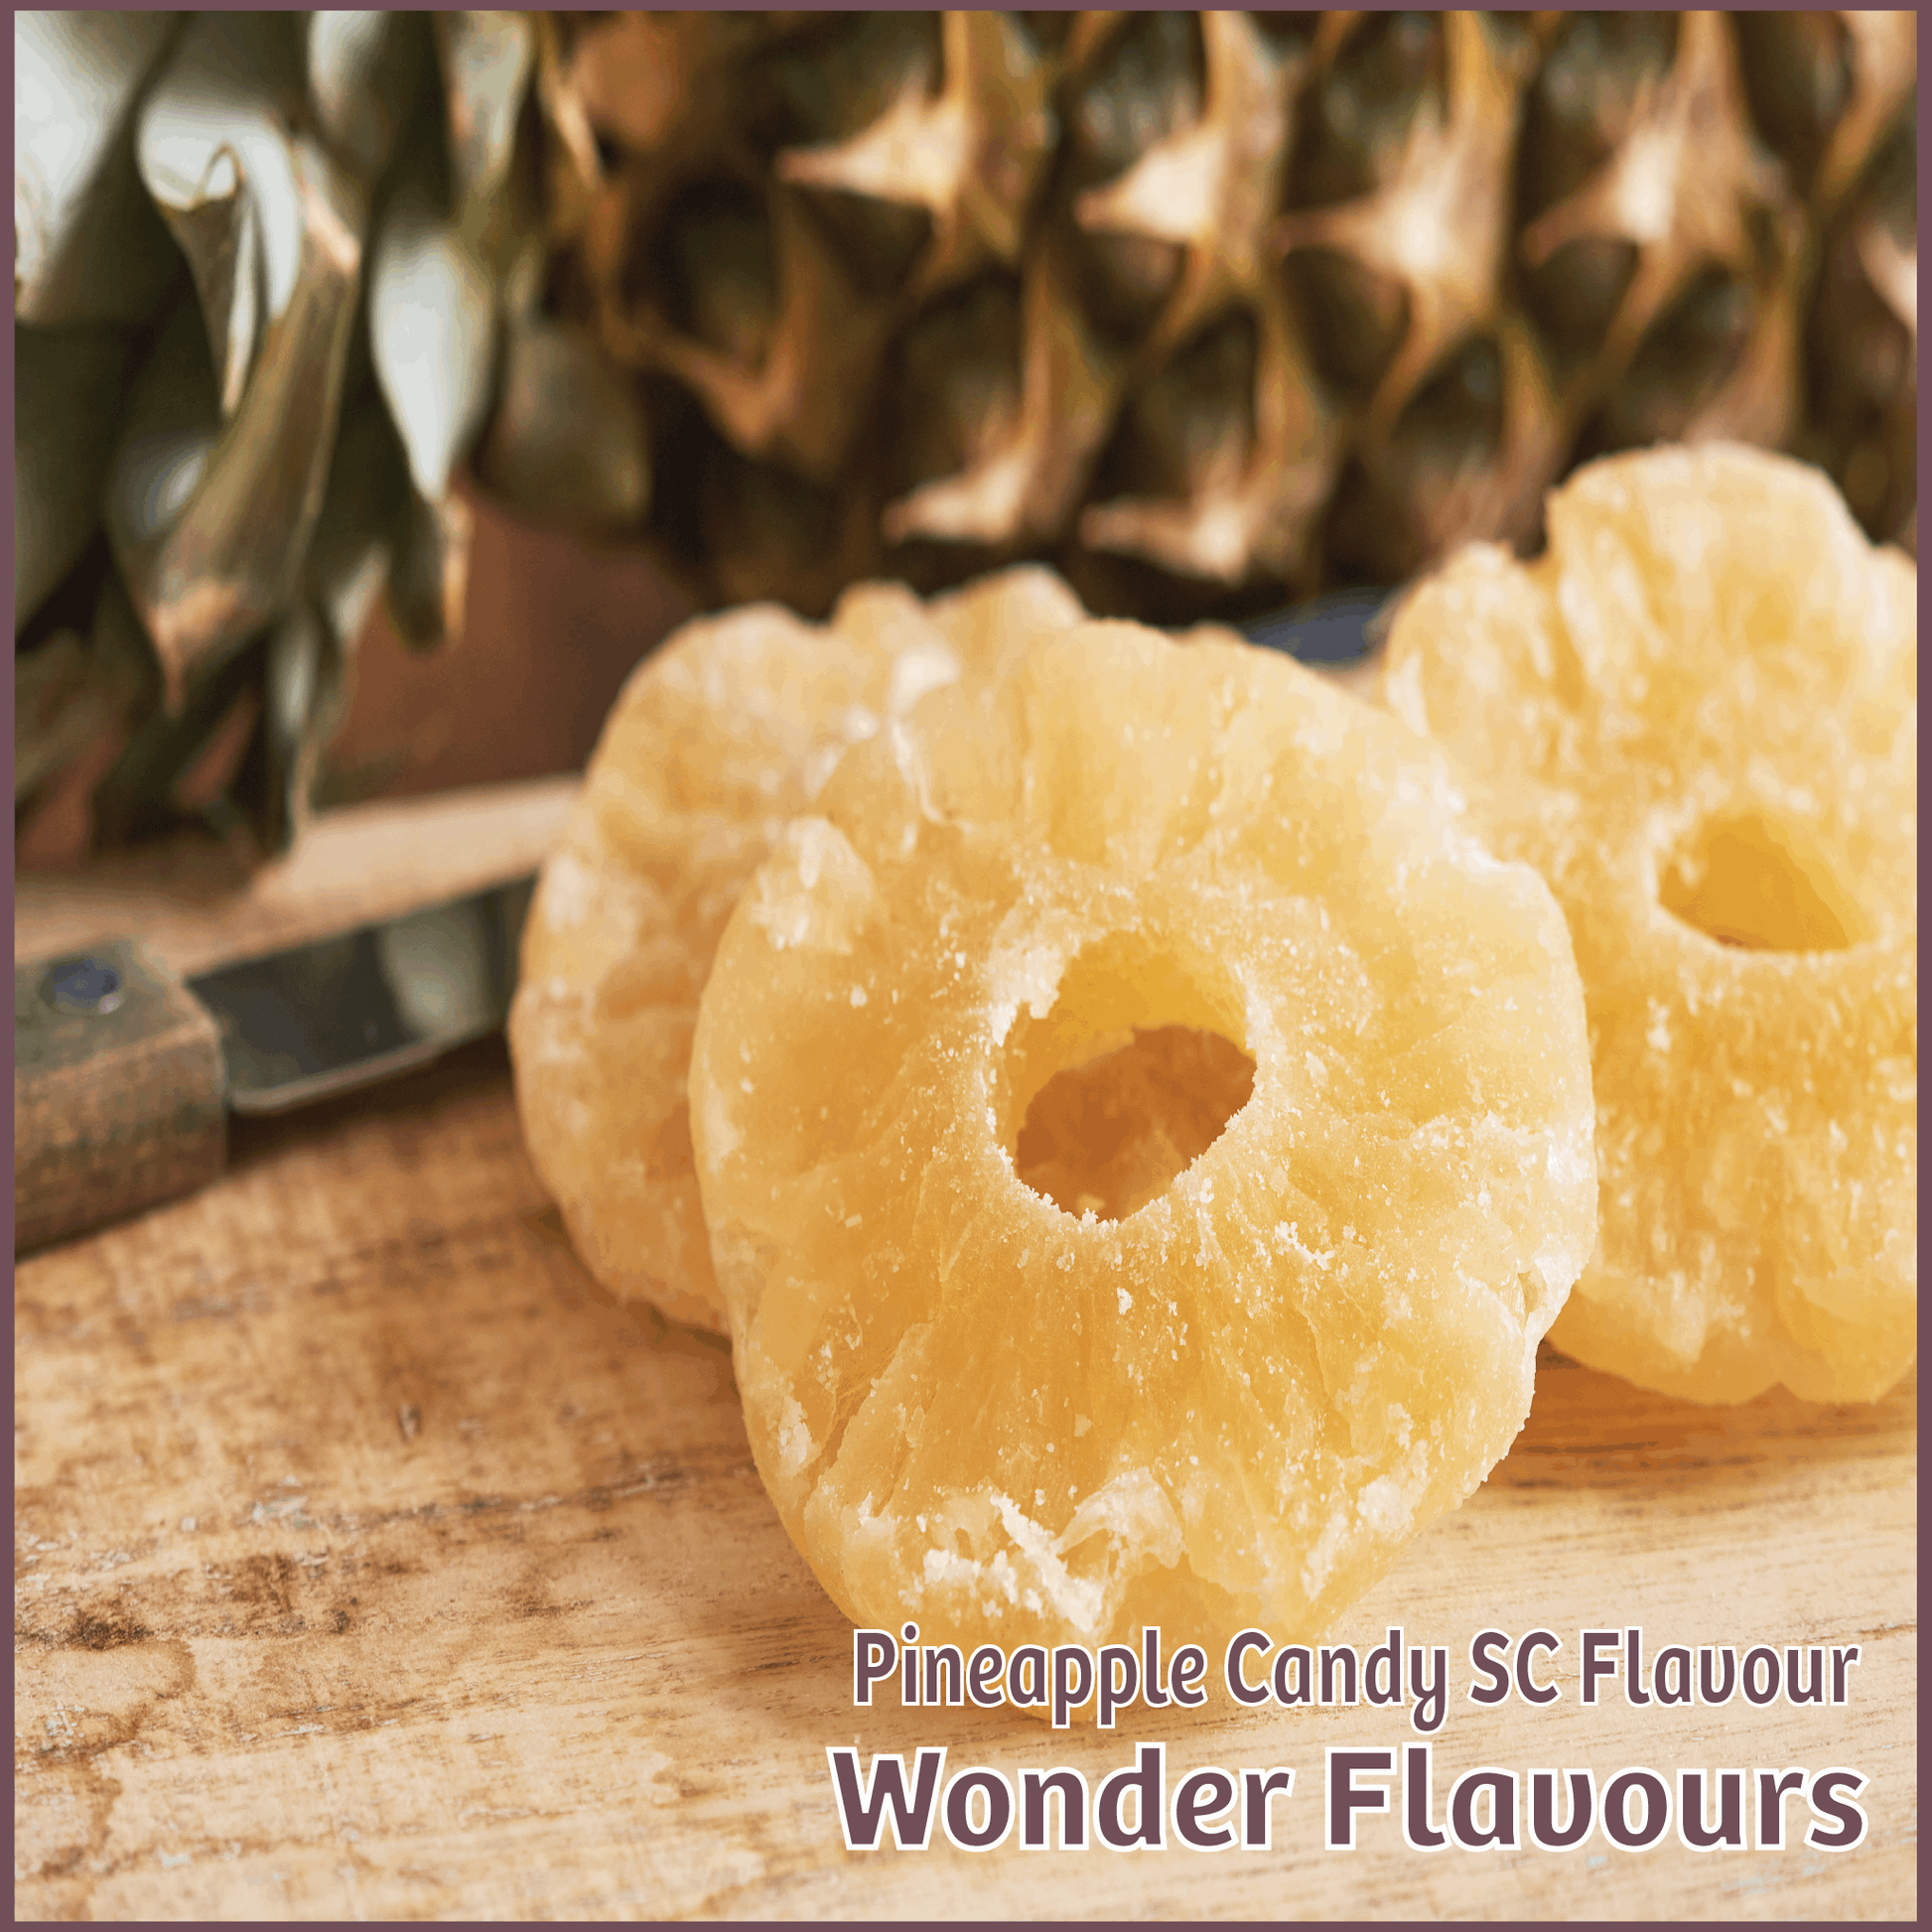 Pineapple Candy SC Flavour - Wonder Flavours - Flavour Fog - Canada's flavour depot.